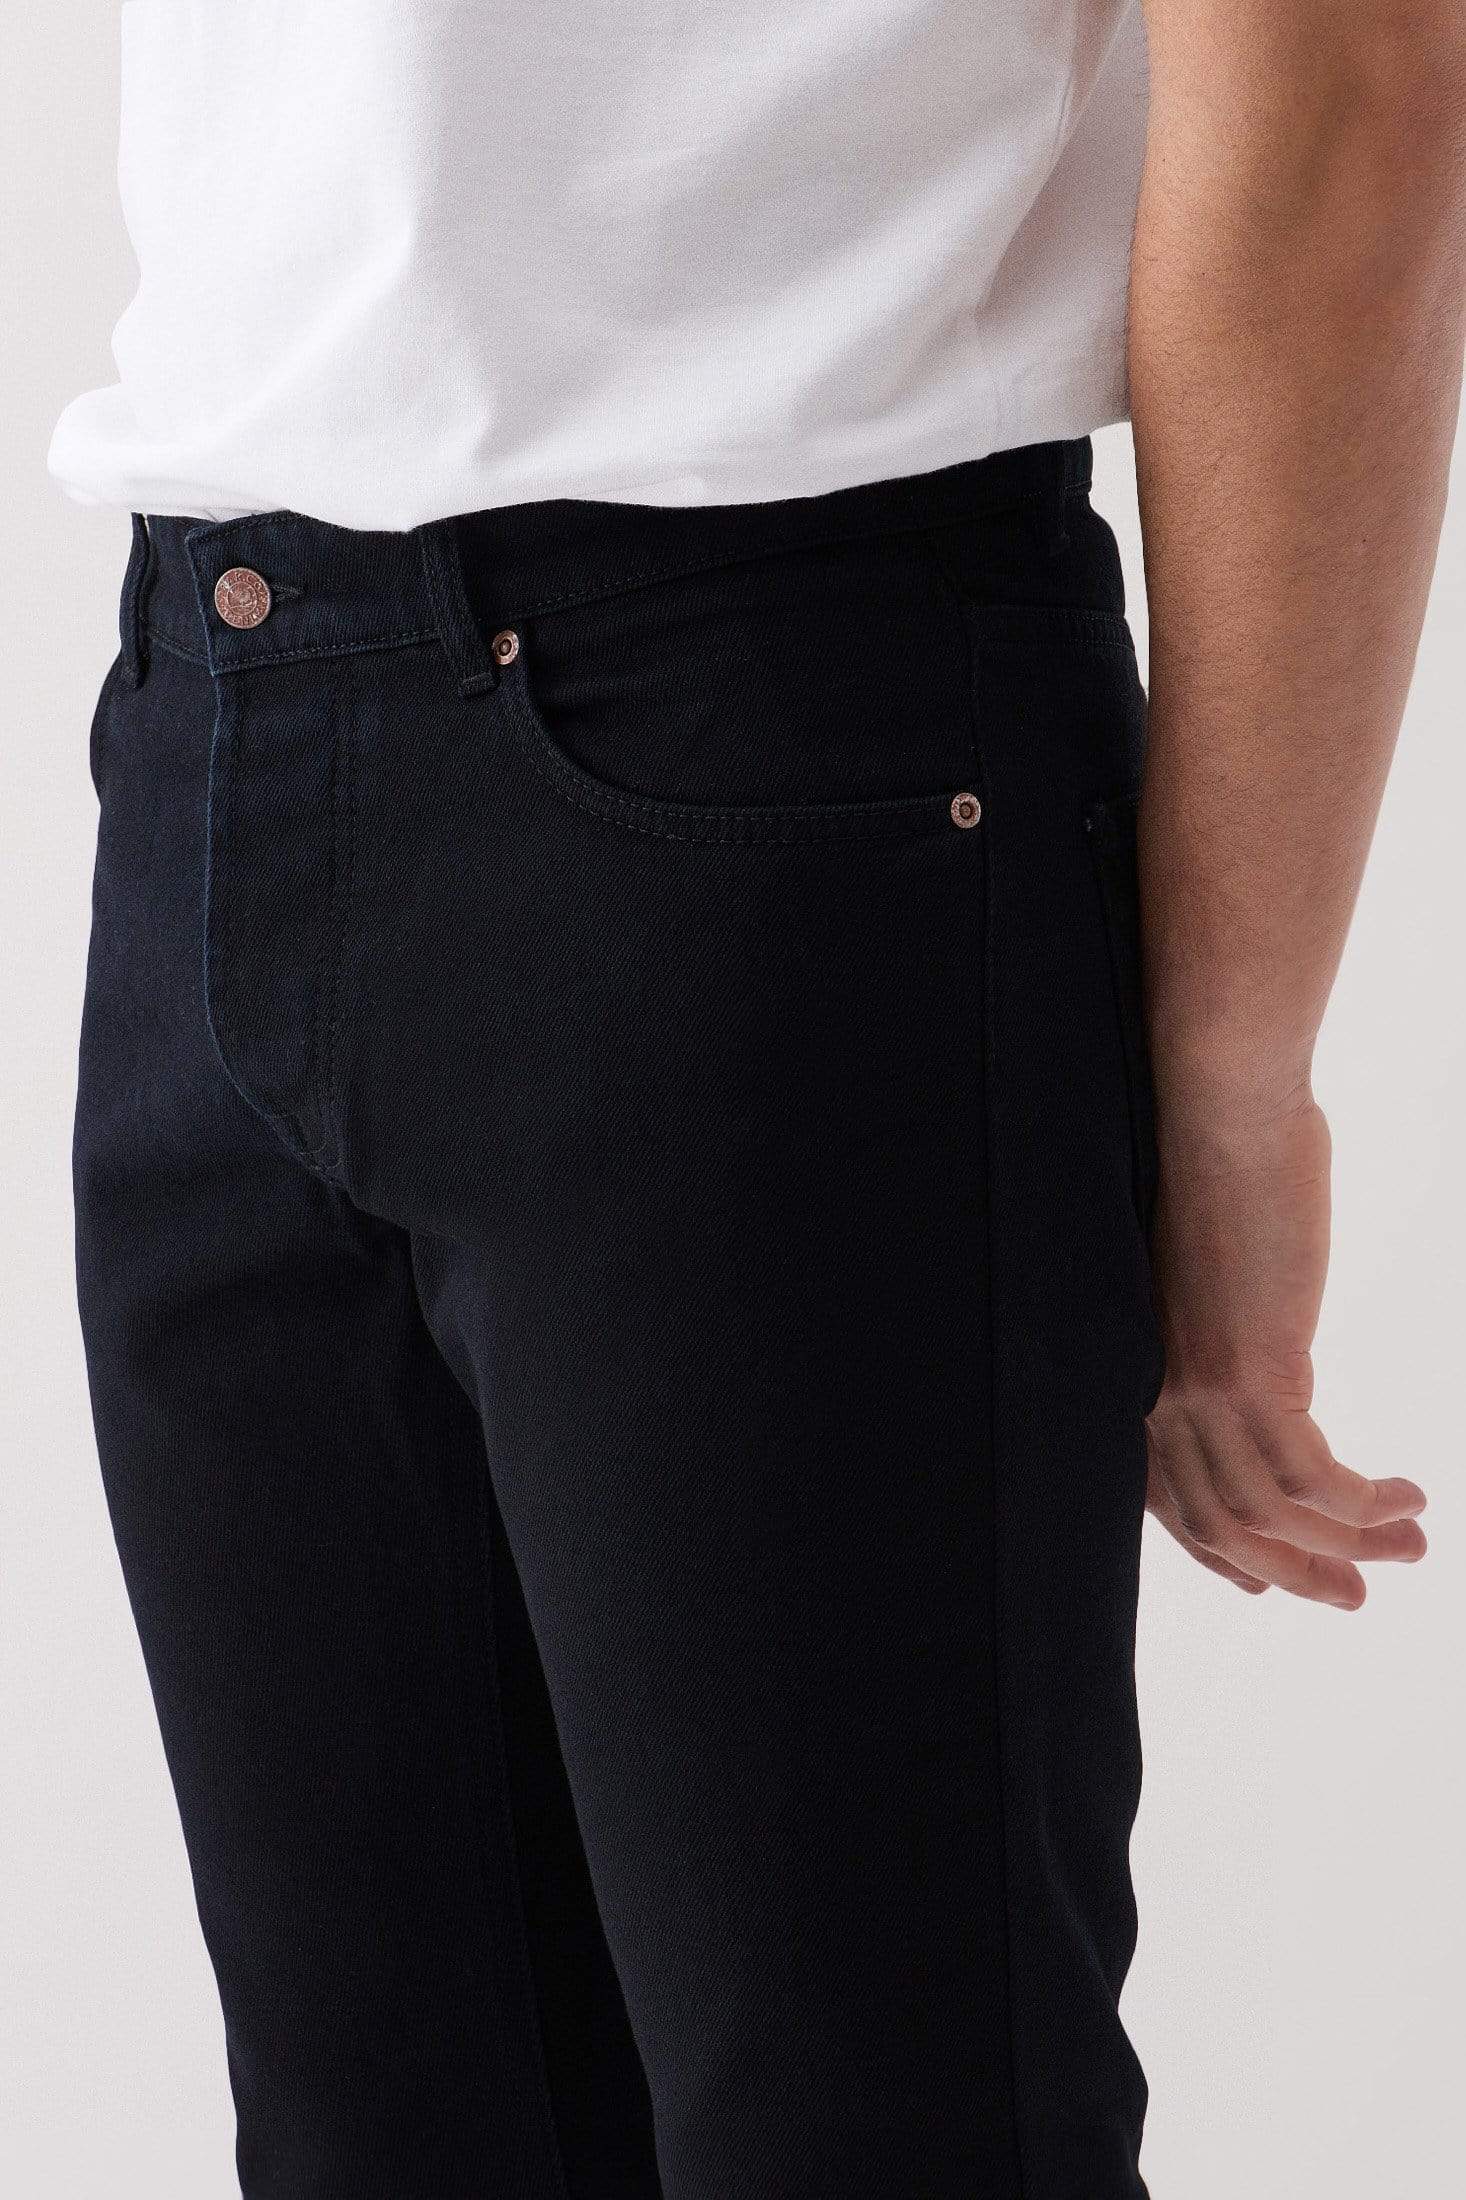 Par.co DENIM Narrow Cedar Black Narrow Jeans βιώσιμη μόδα ηθική μόδα